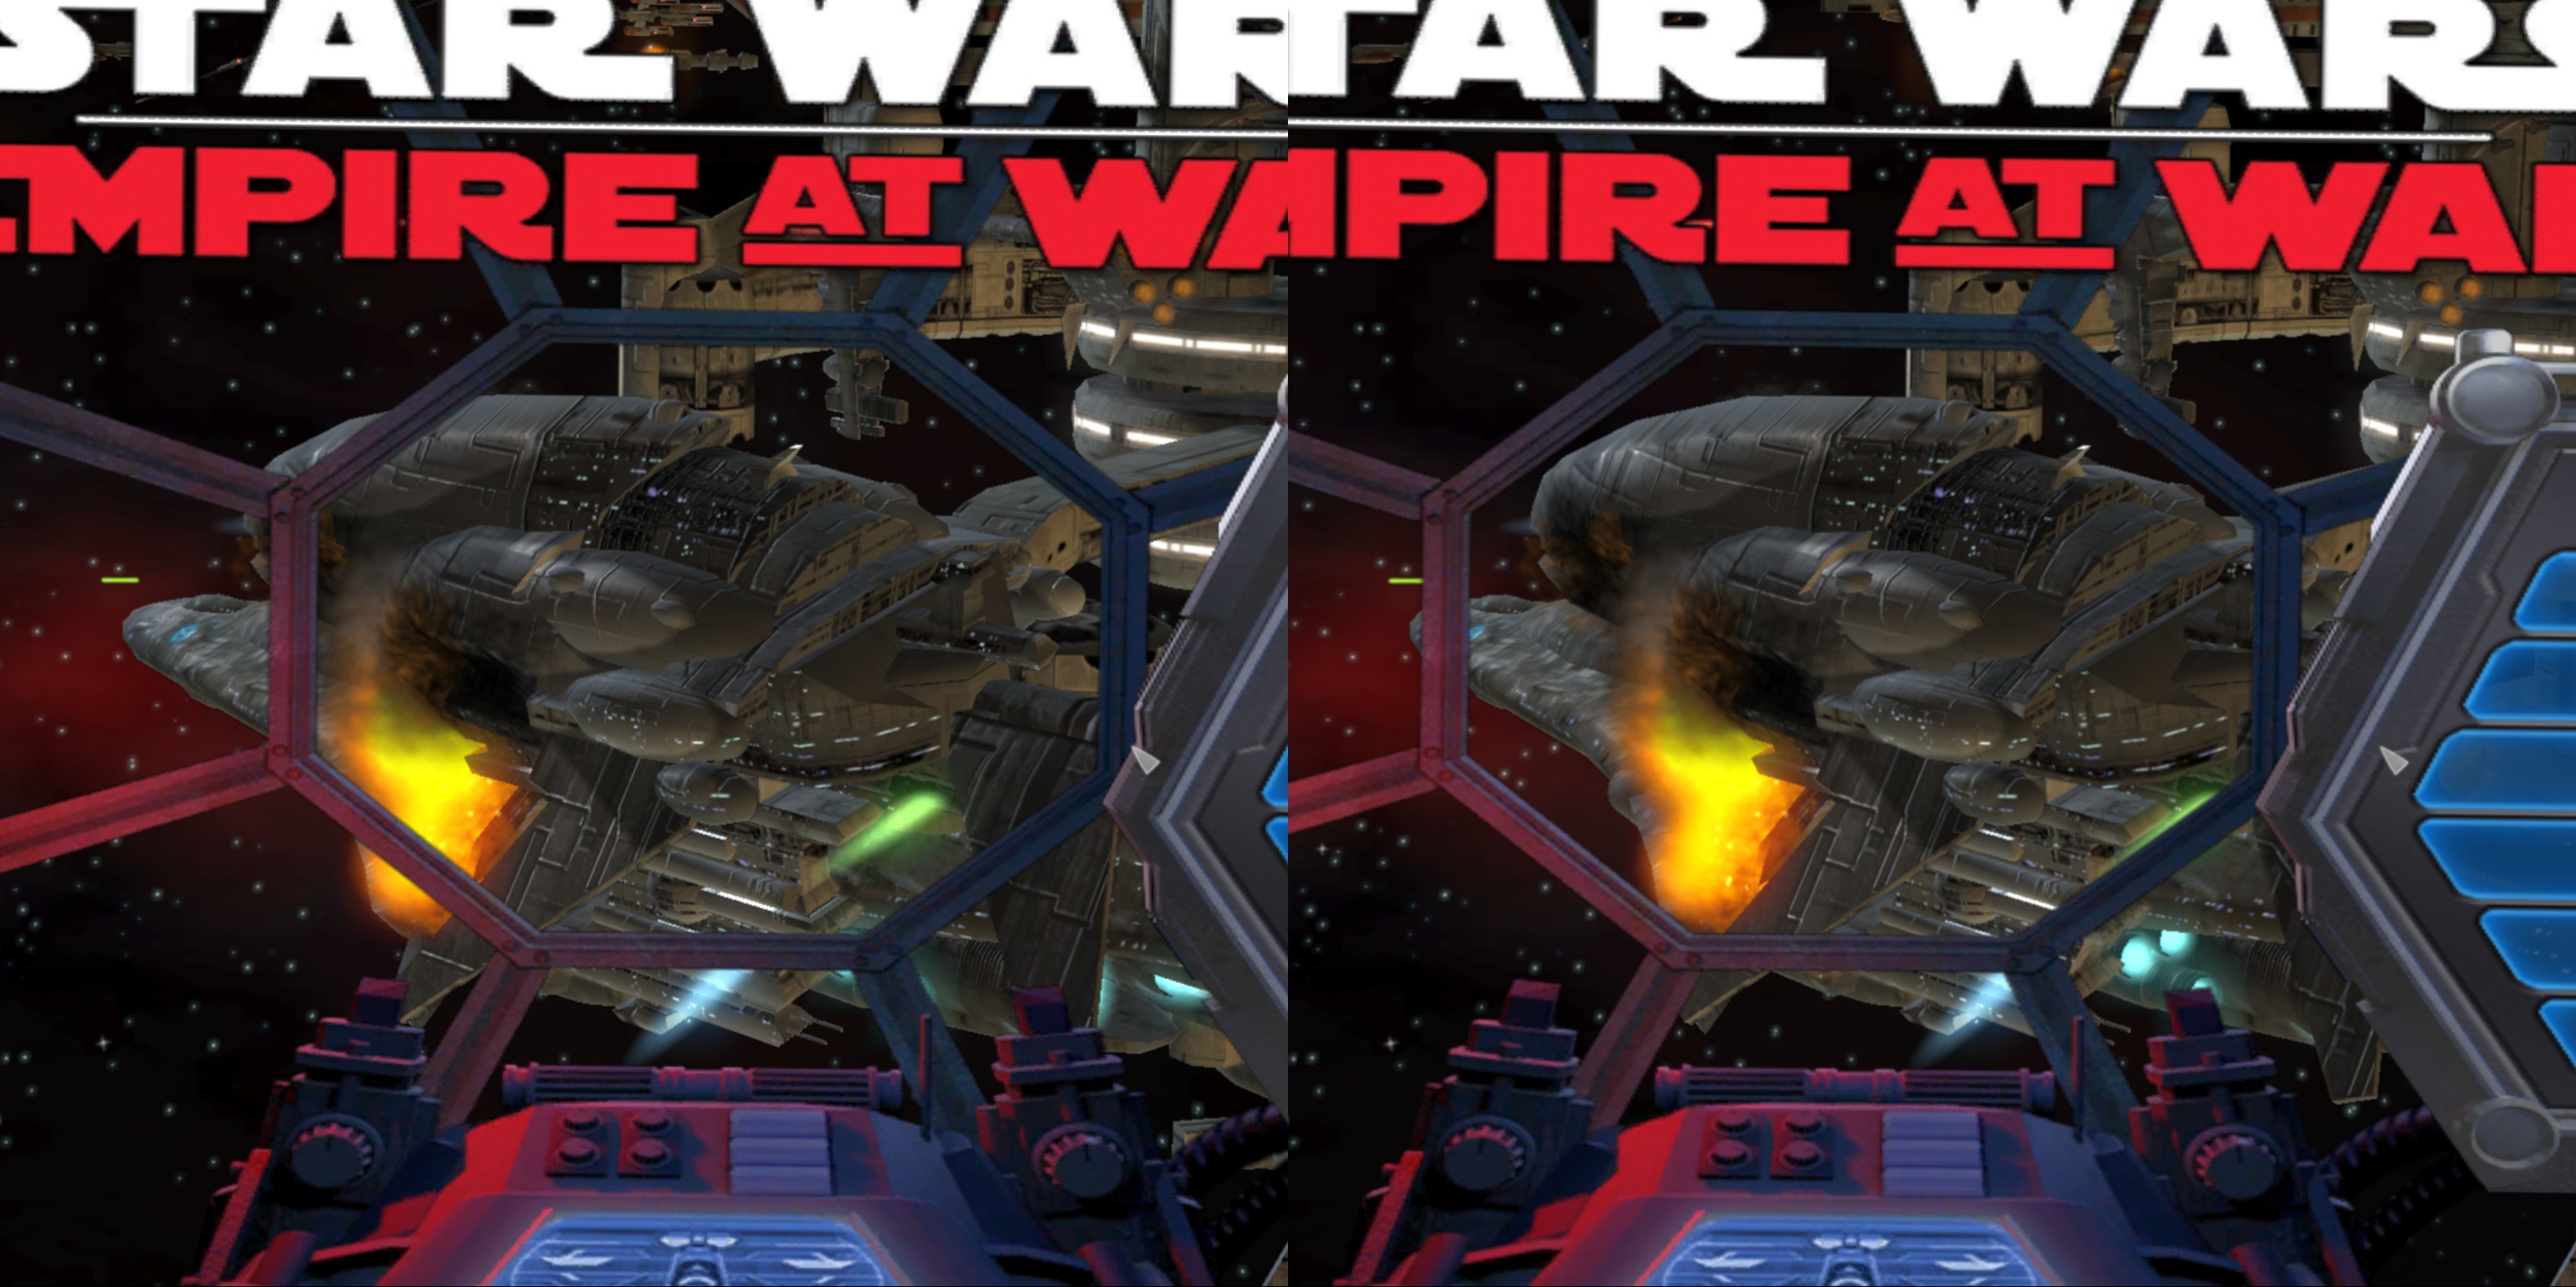 BlackSite: Area 51 in VR with VorpX